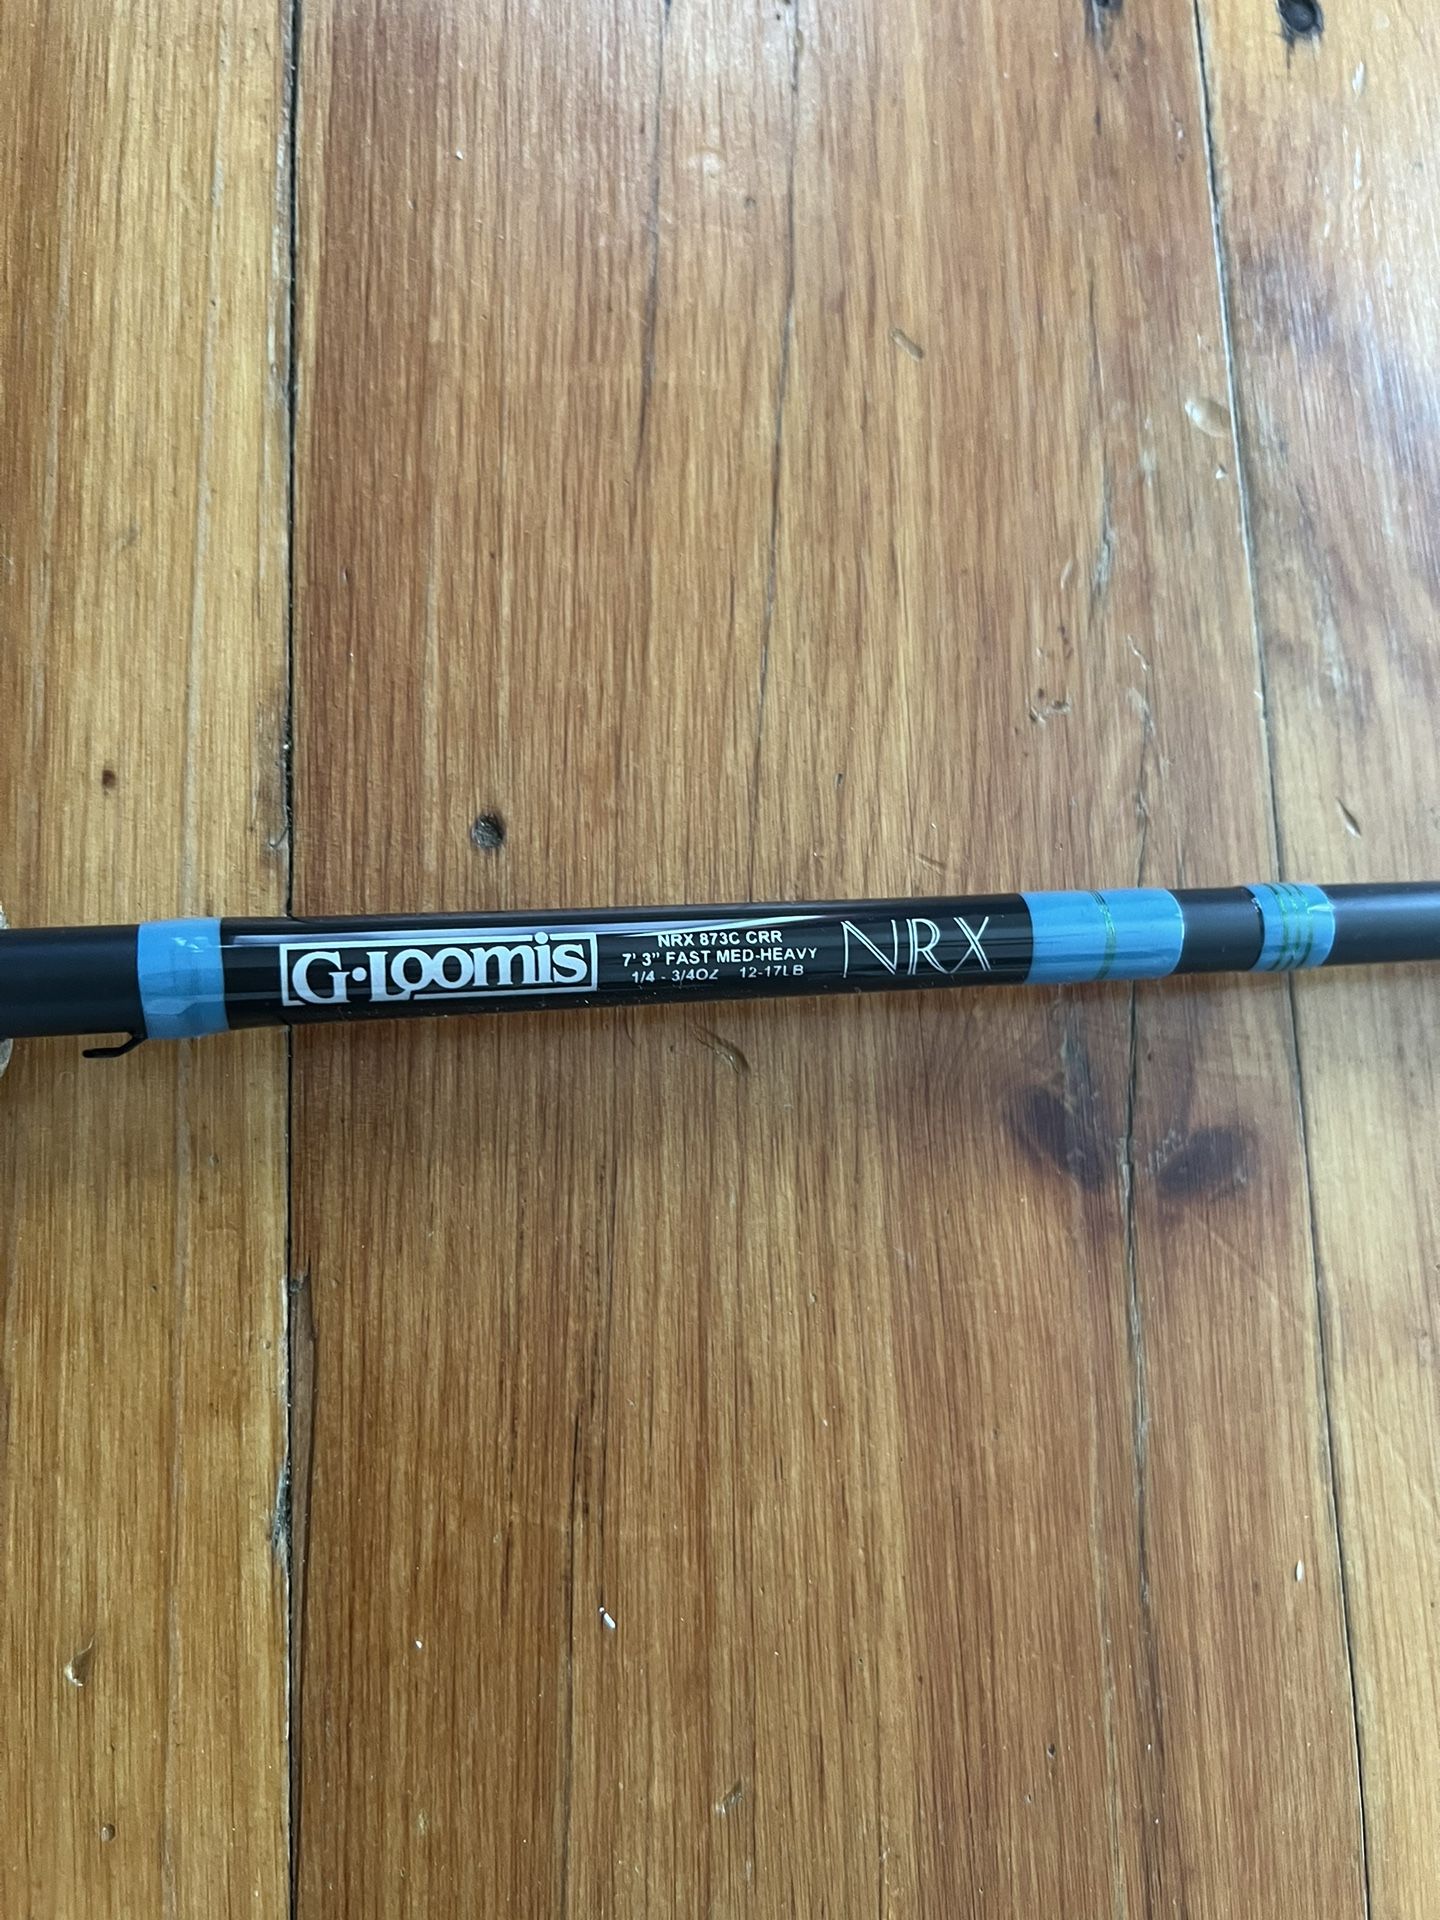 GLoomis NRX 873C CRR